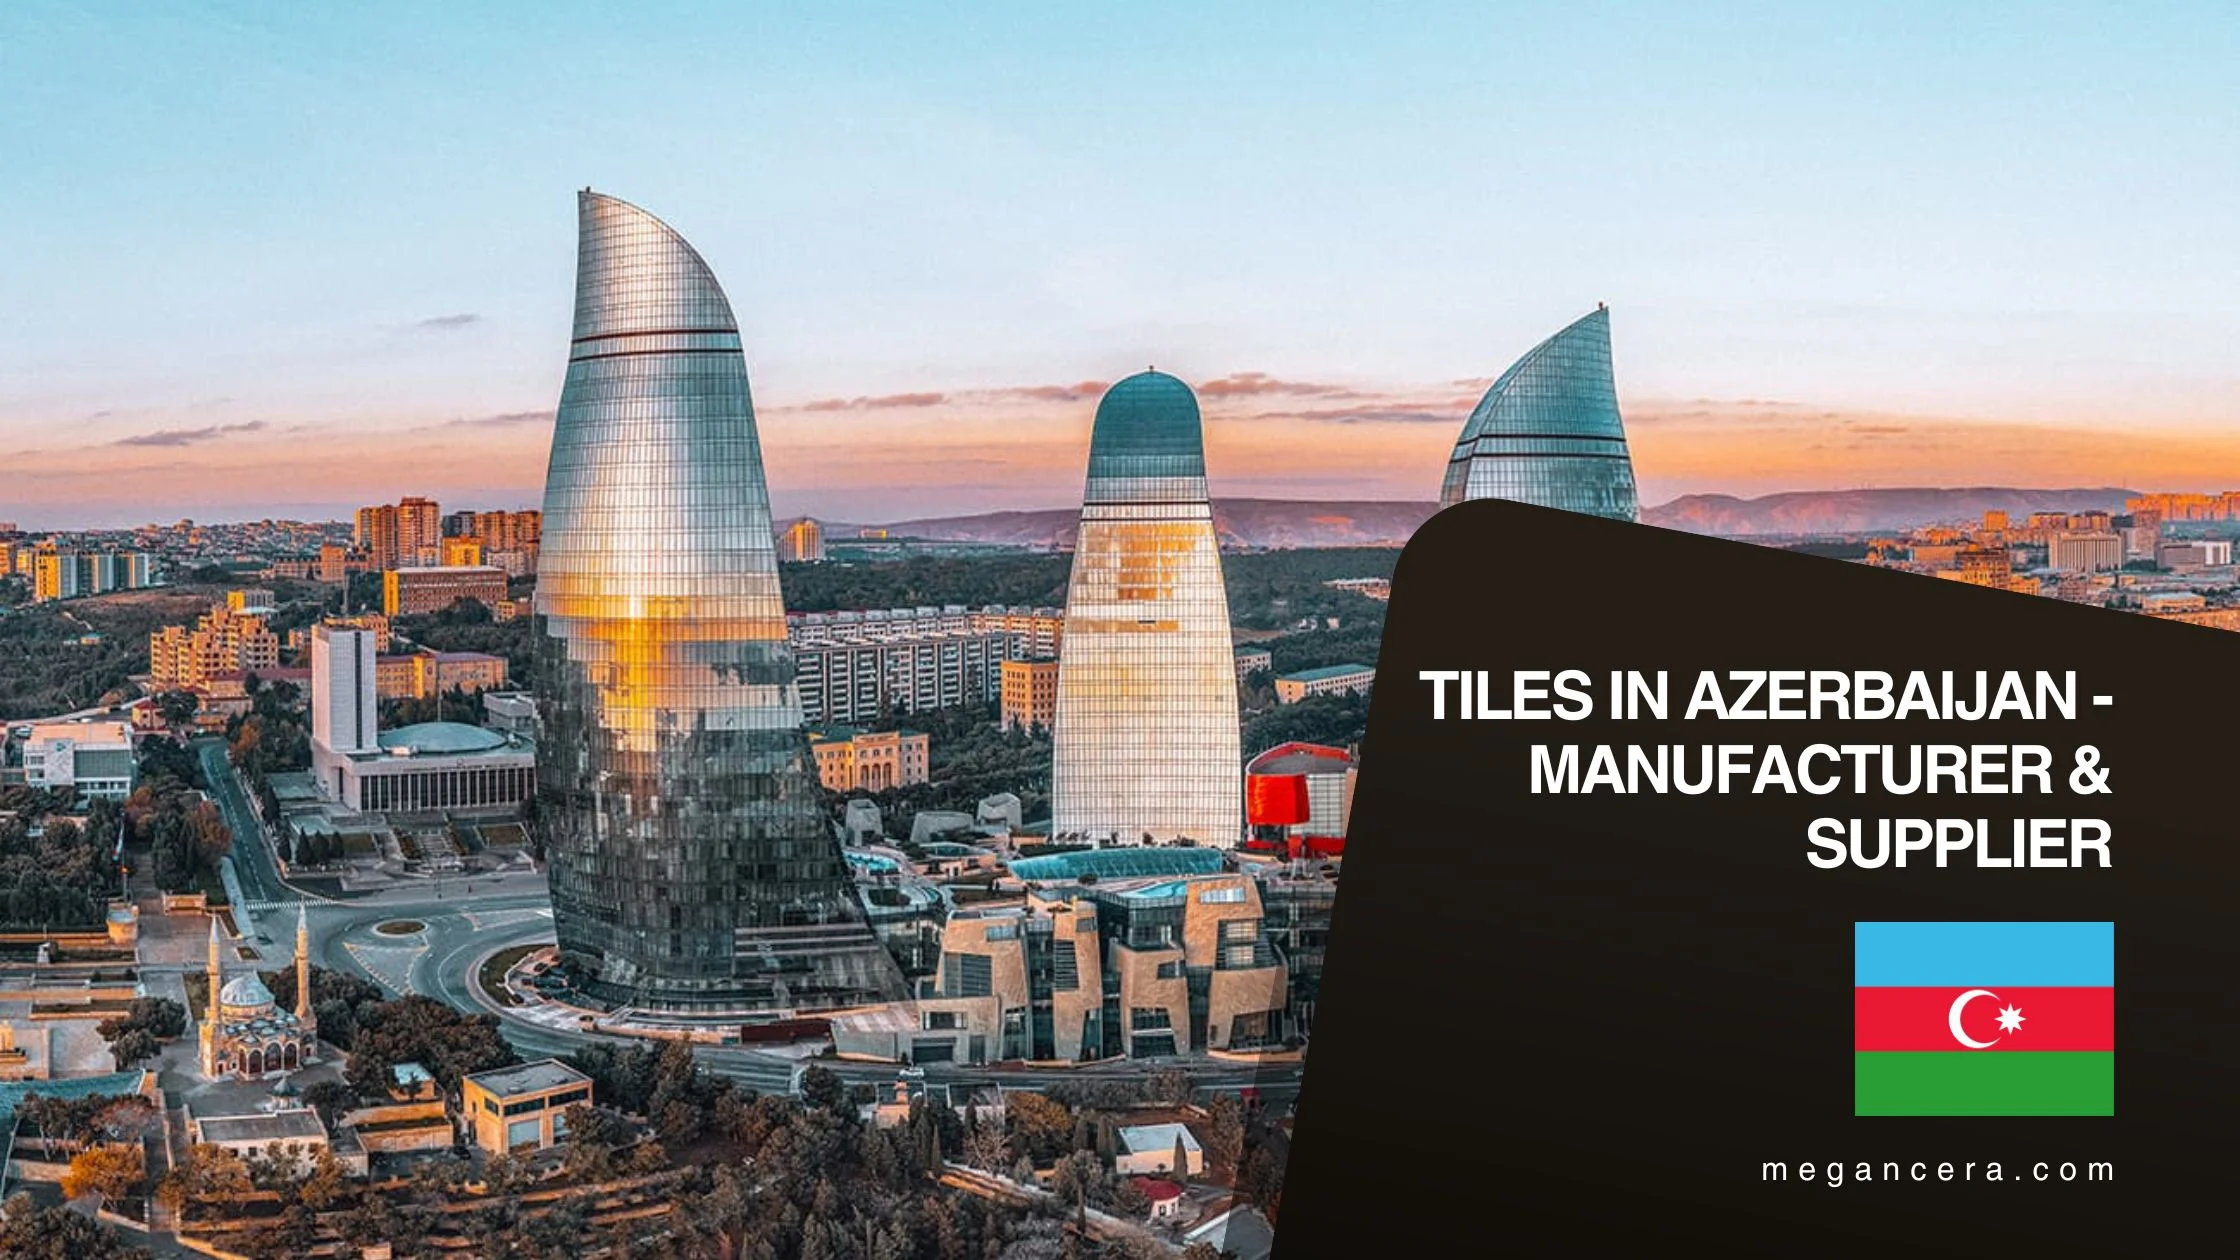 Tiles in Azerbaijan - Manufacturer & Supplier